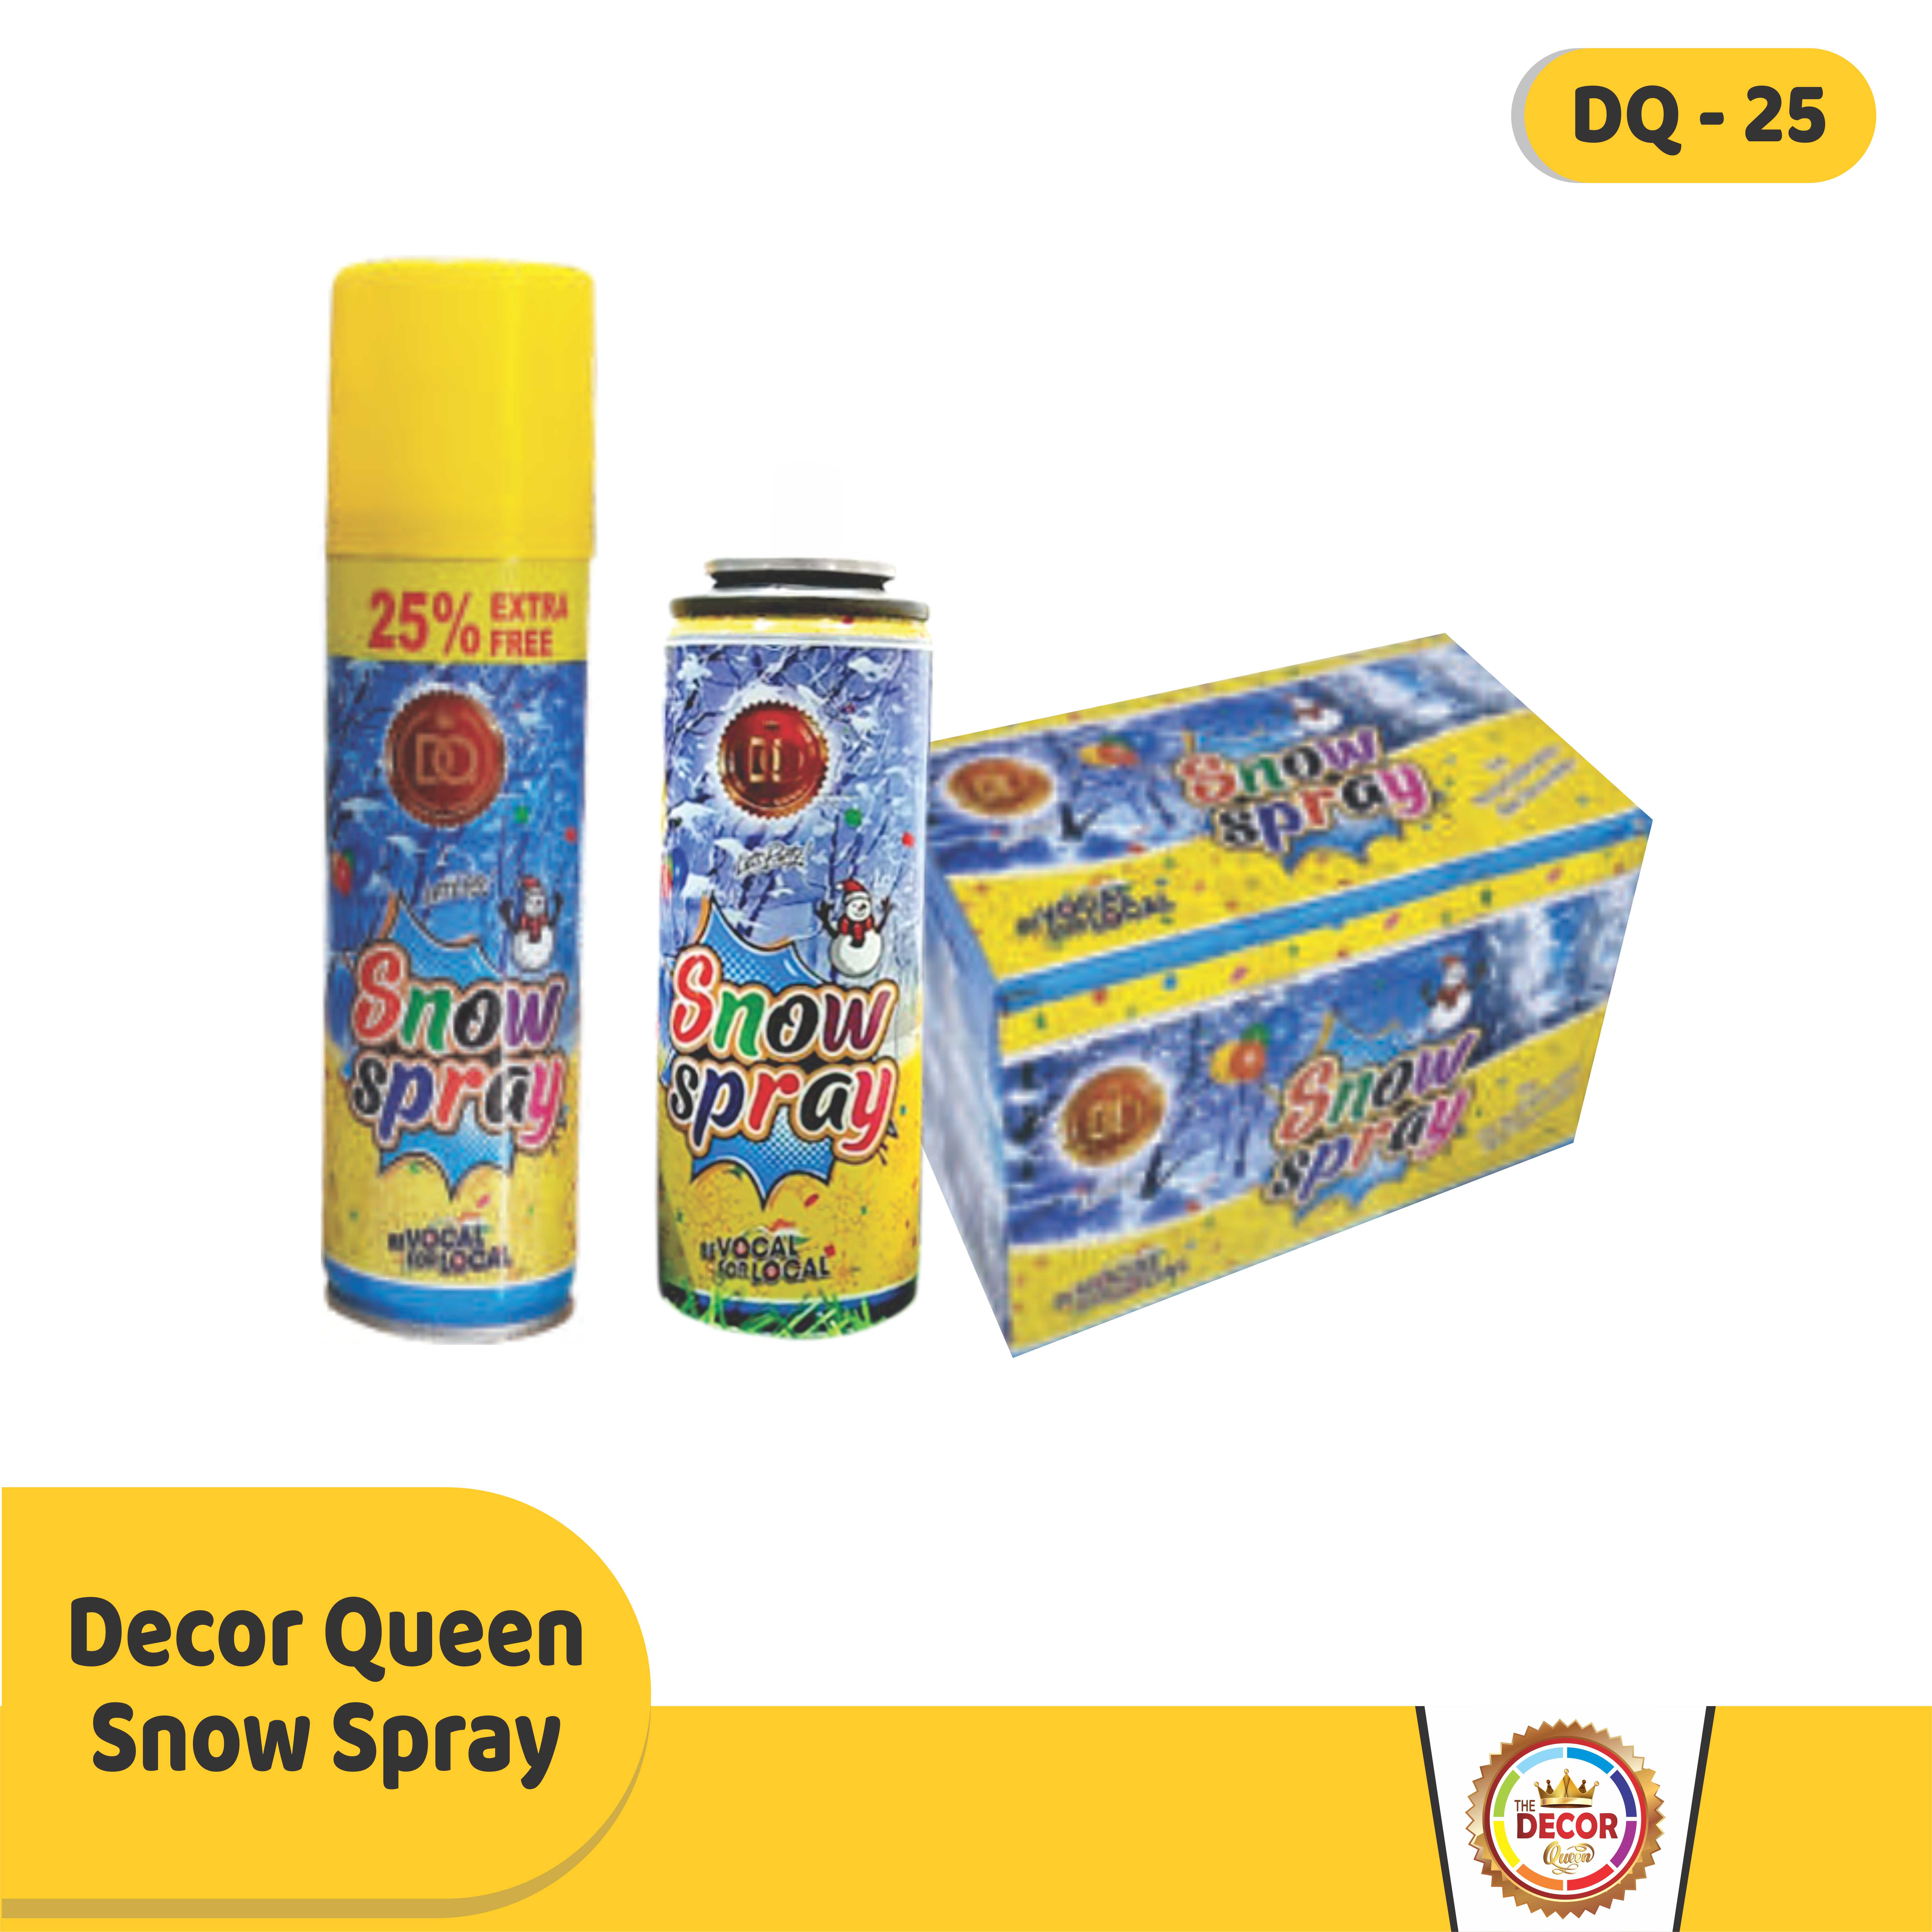 DECOR QUEEN SNOW SPRAY|Party Products|Snow Spray